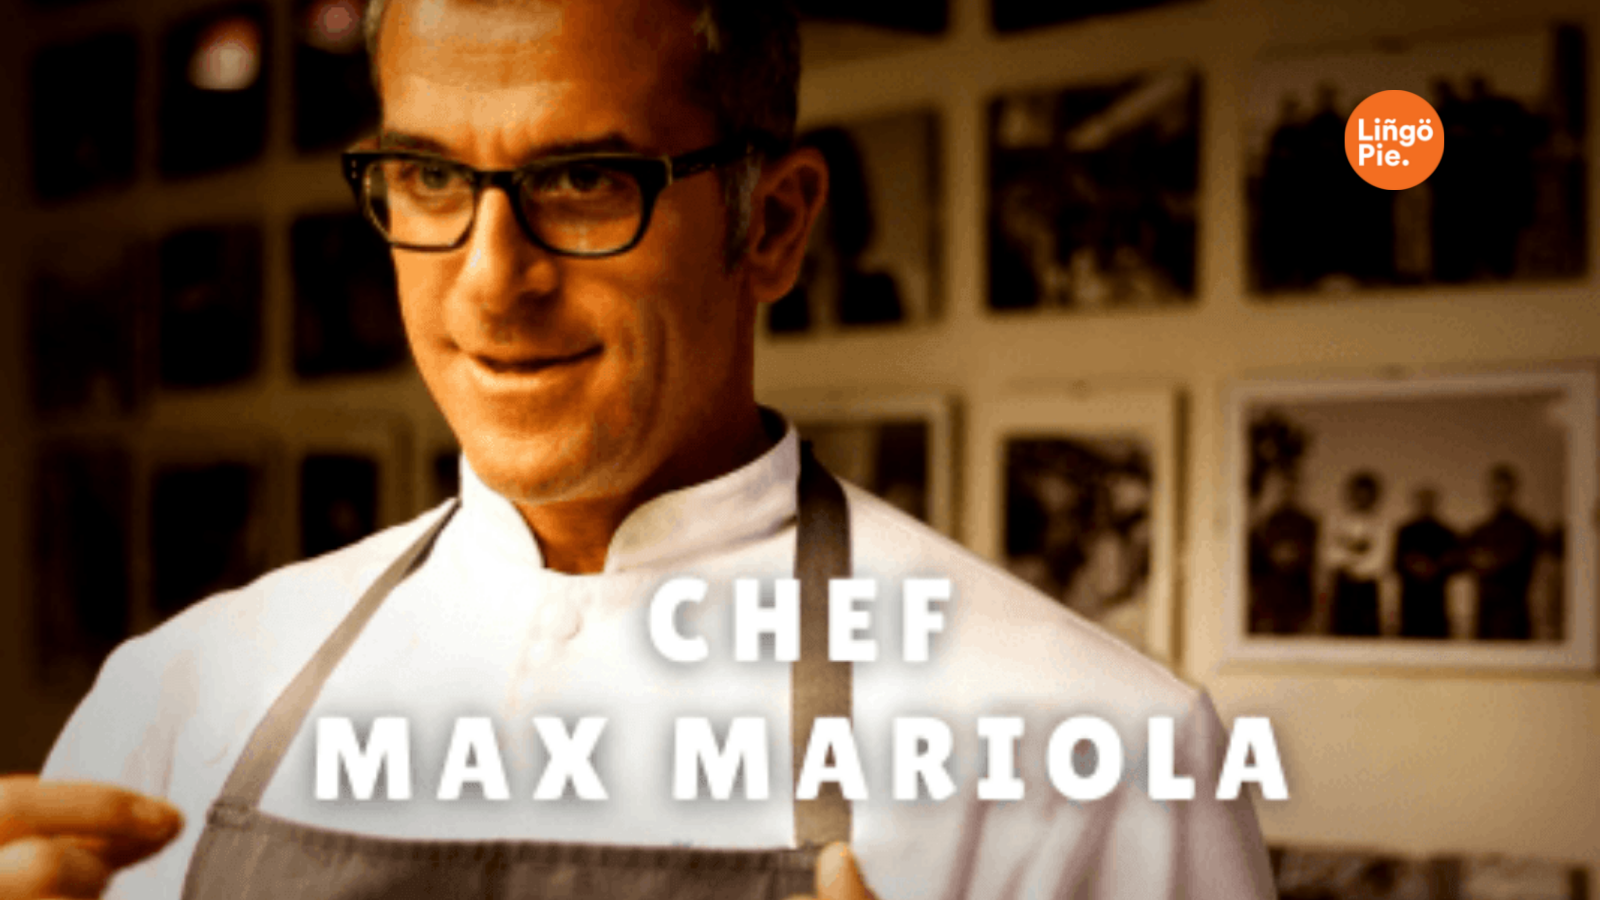 Chef Max Mariola on Lingopie.